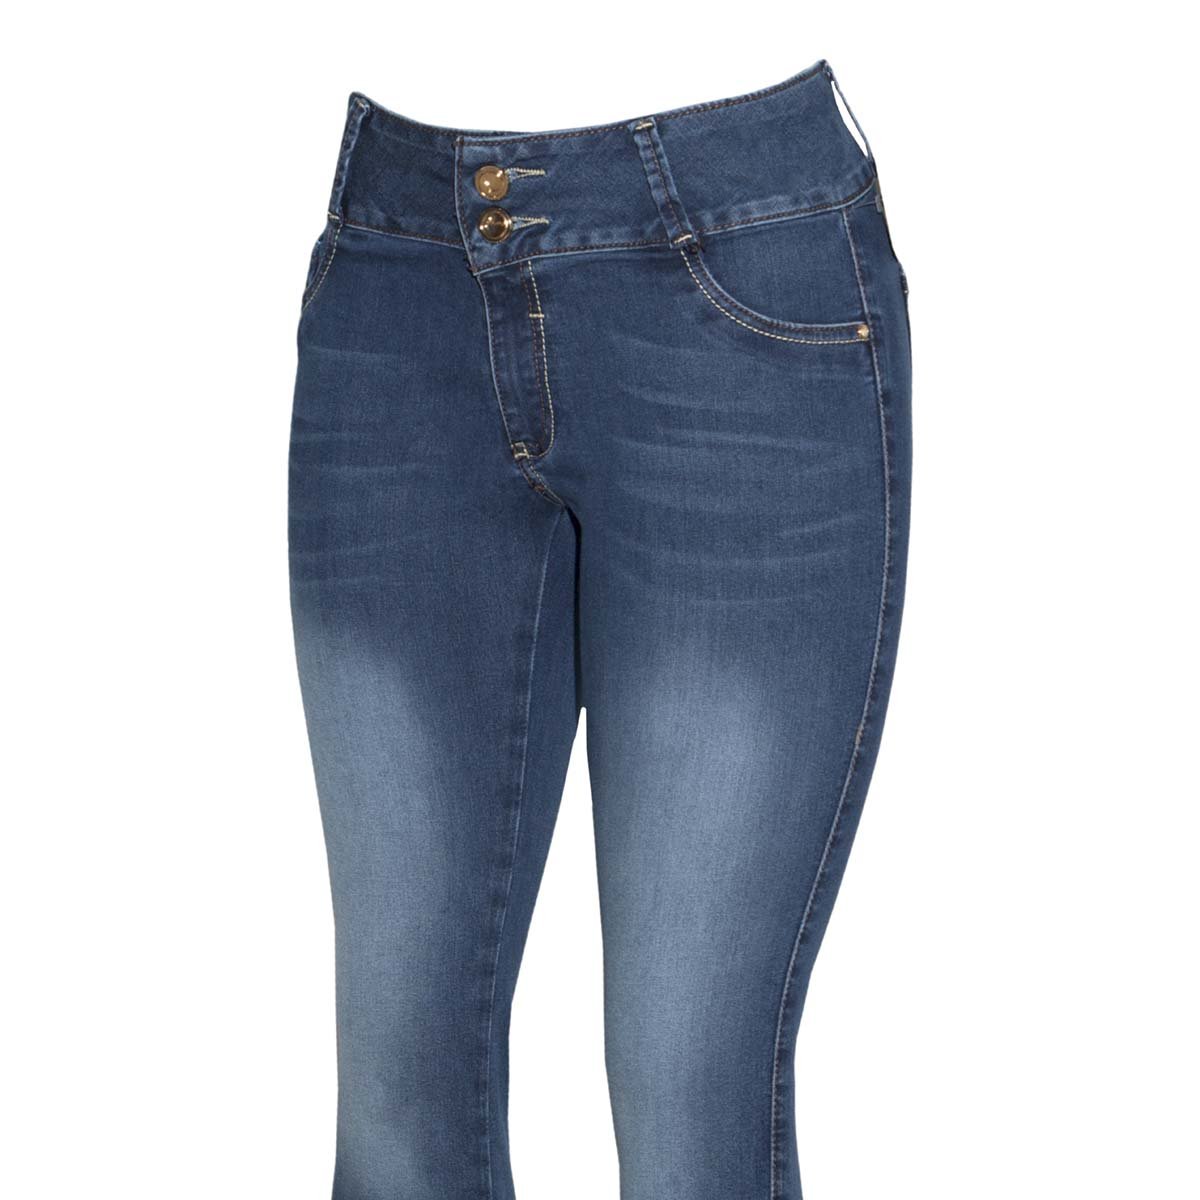 Jeans Skinny con Parche en Bolsas Traseras Limoncello